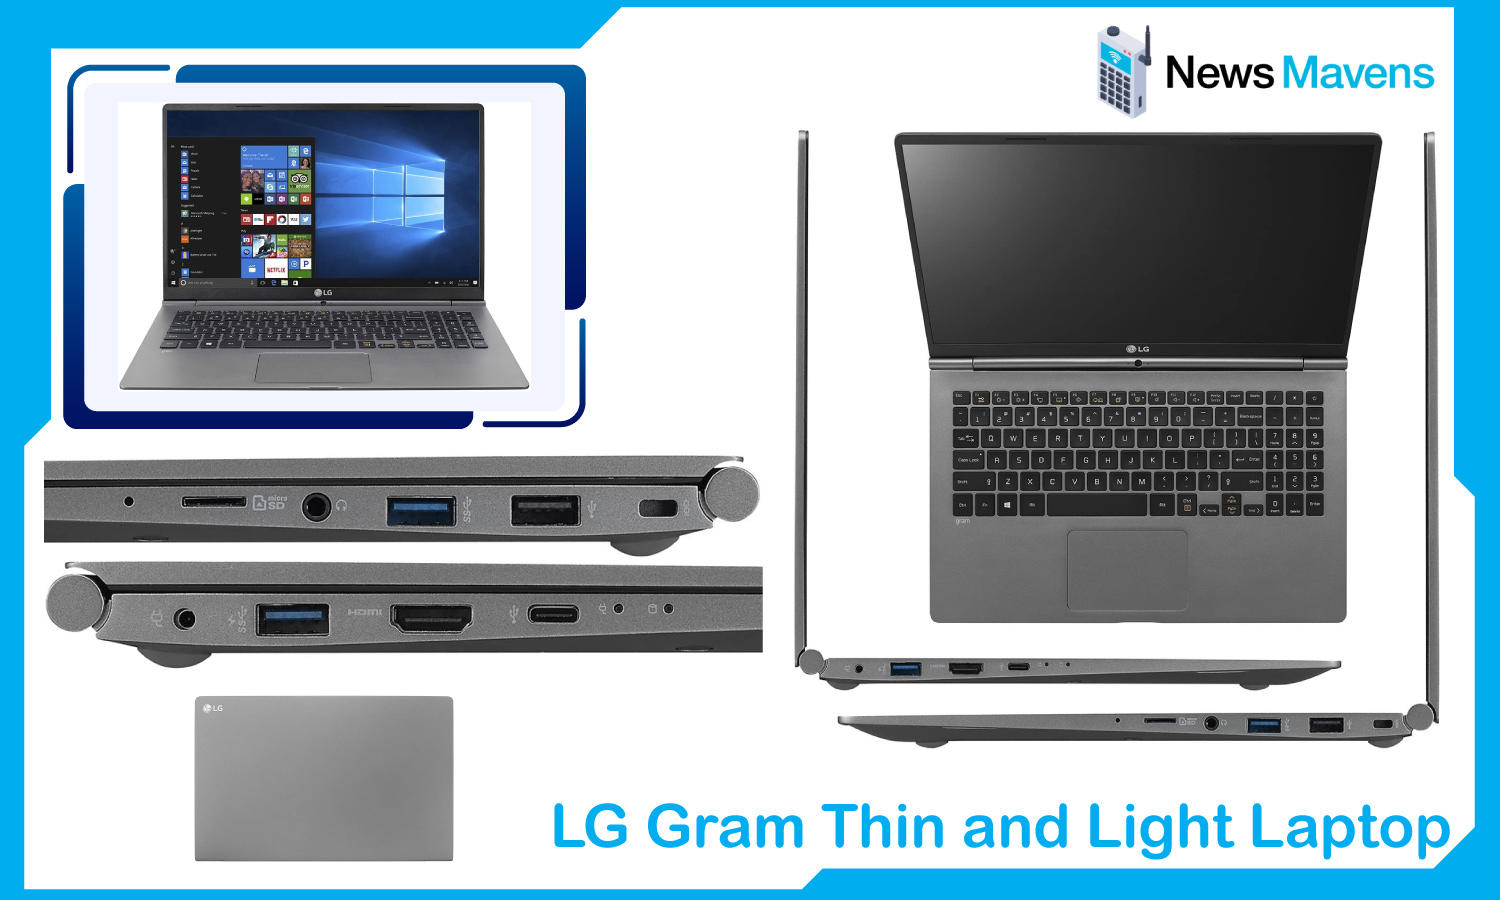 LG Gram Thin and Light Laptop